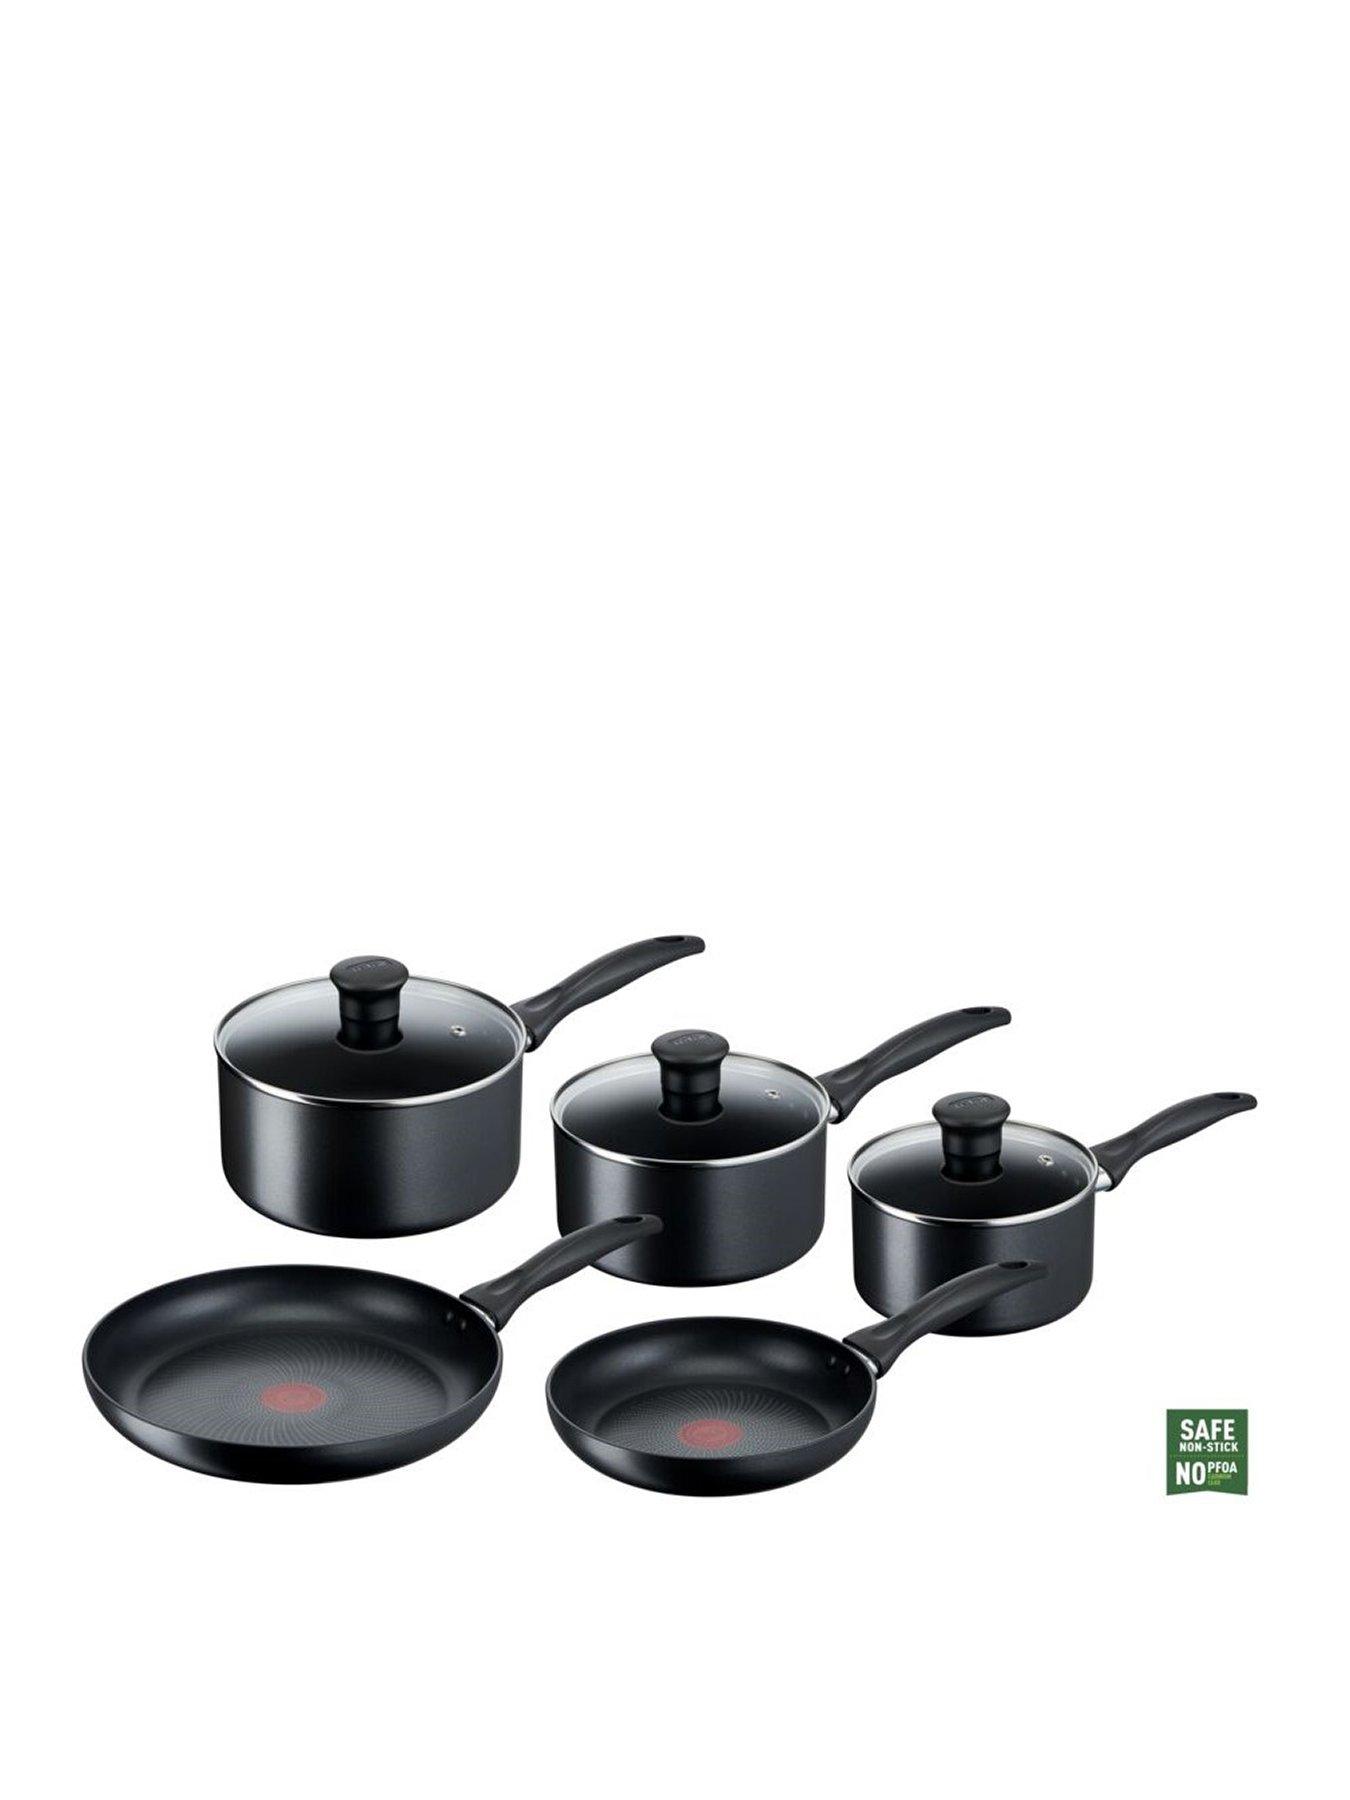 Pots and pans - Tefal